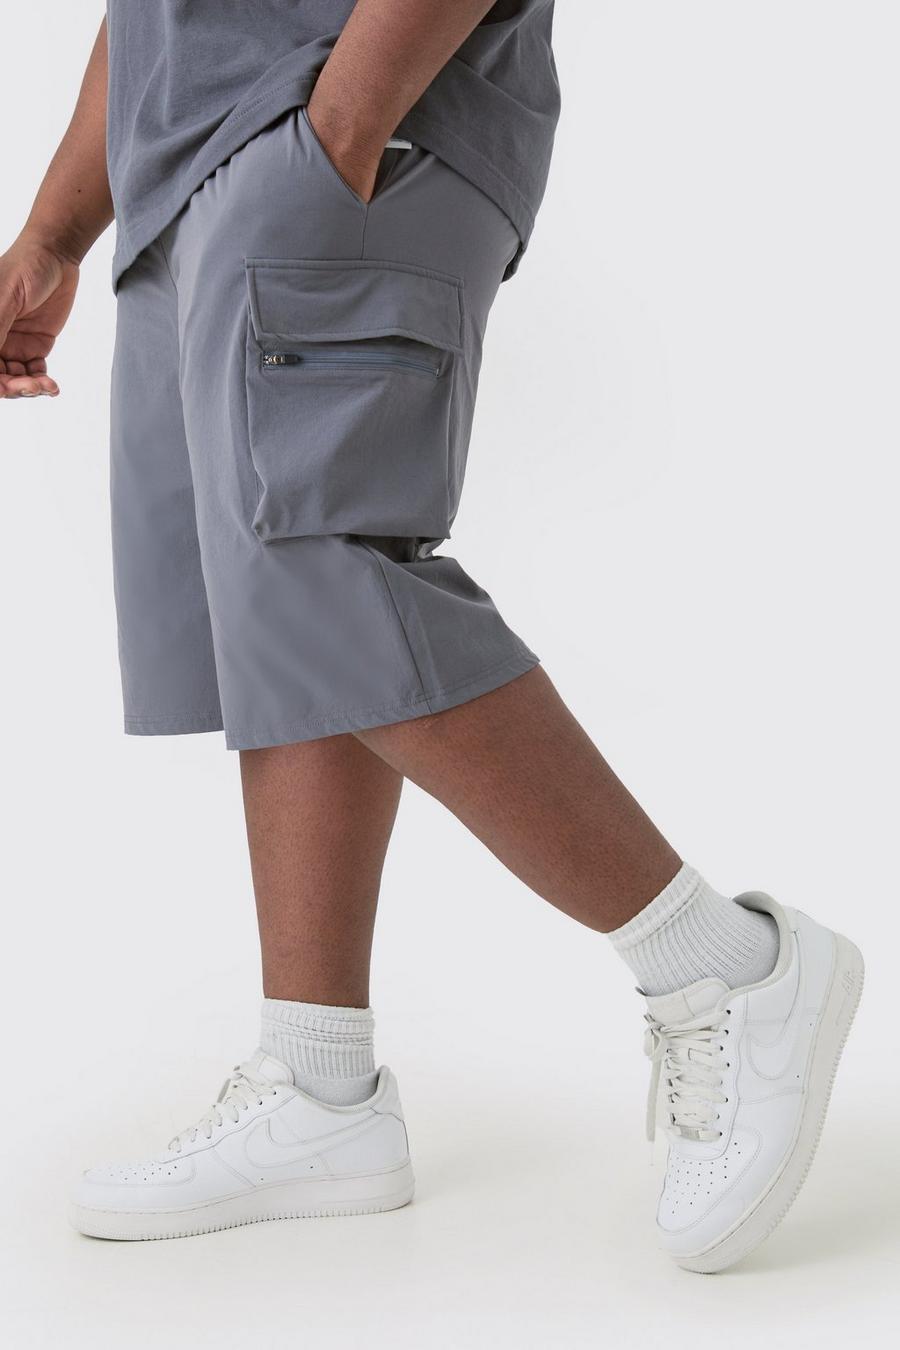 Pantalón corto Plus cargo elástico ligero holgado, Charcoal